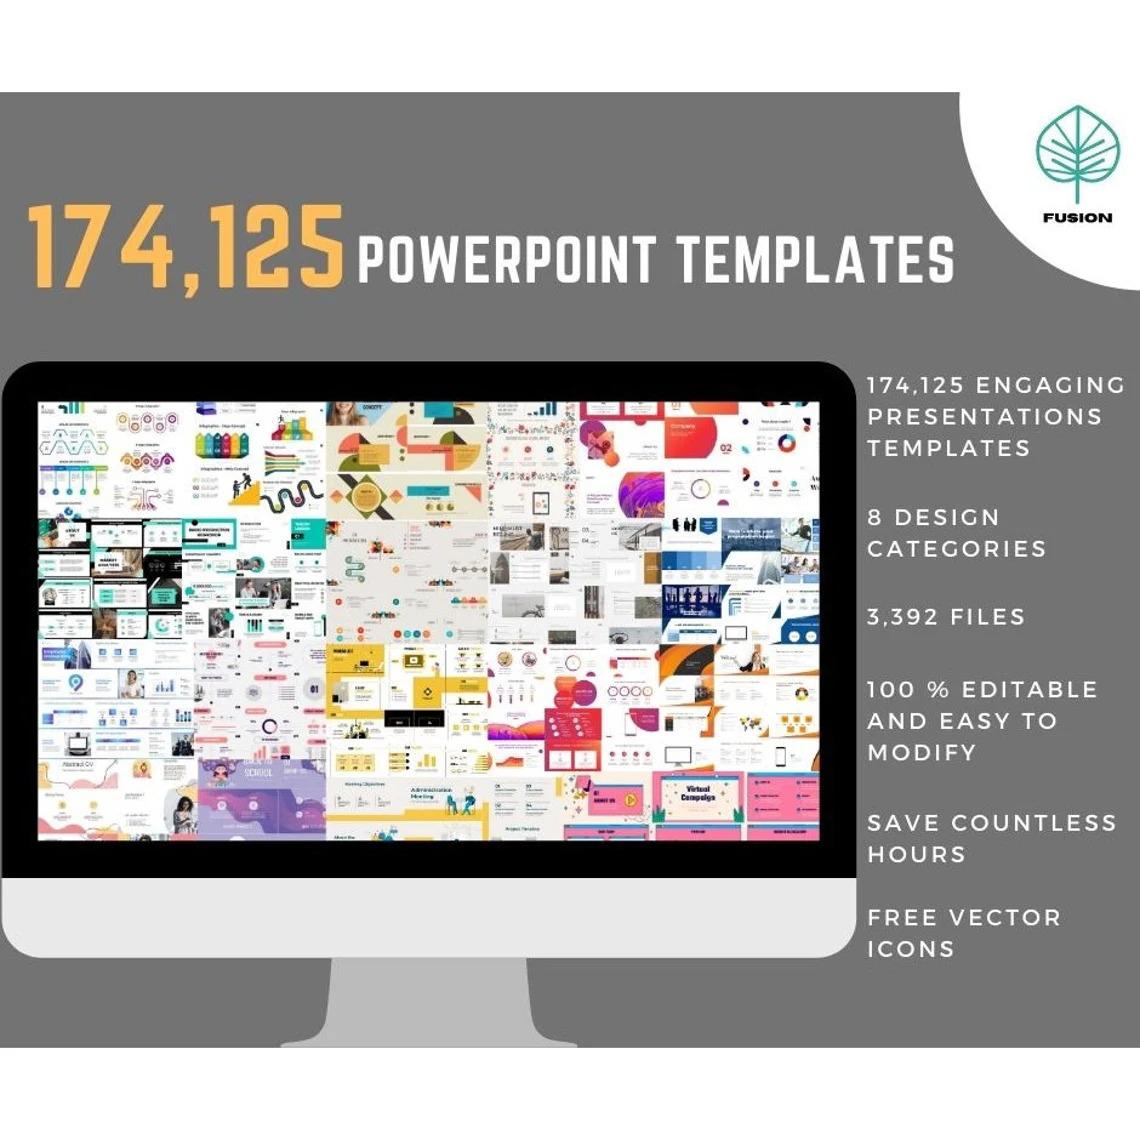 174,125 PowerPoint Templates